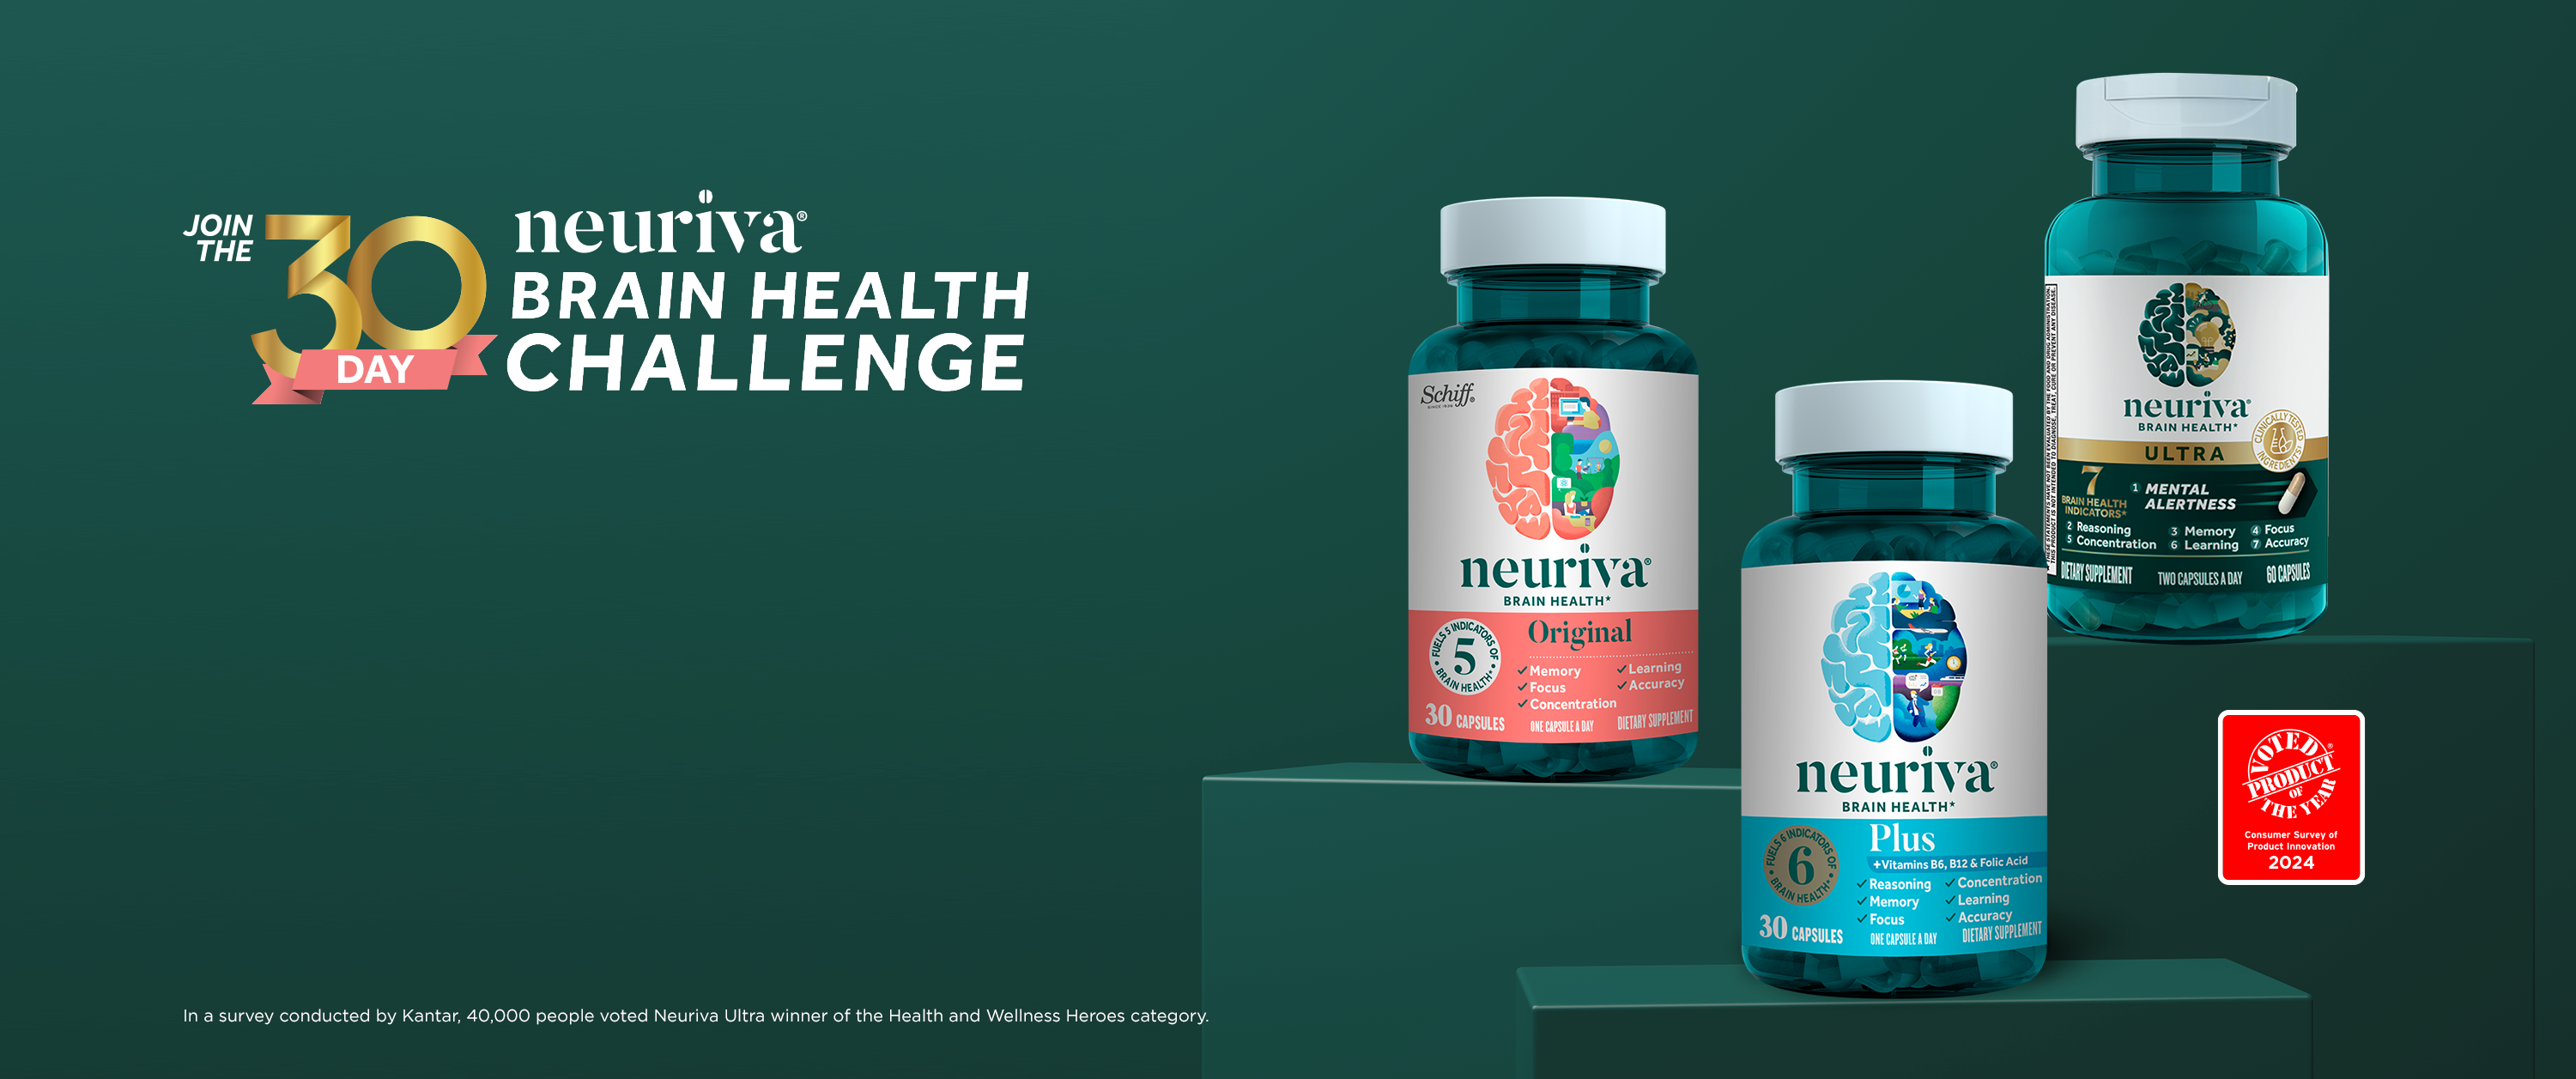 Join 30 day neuriva brain health challenge